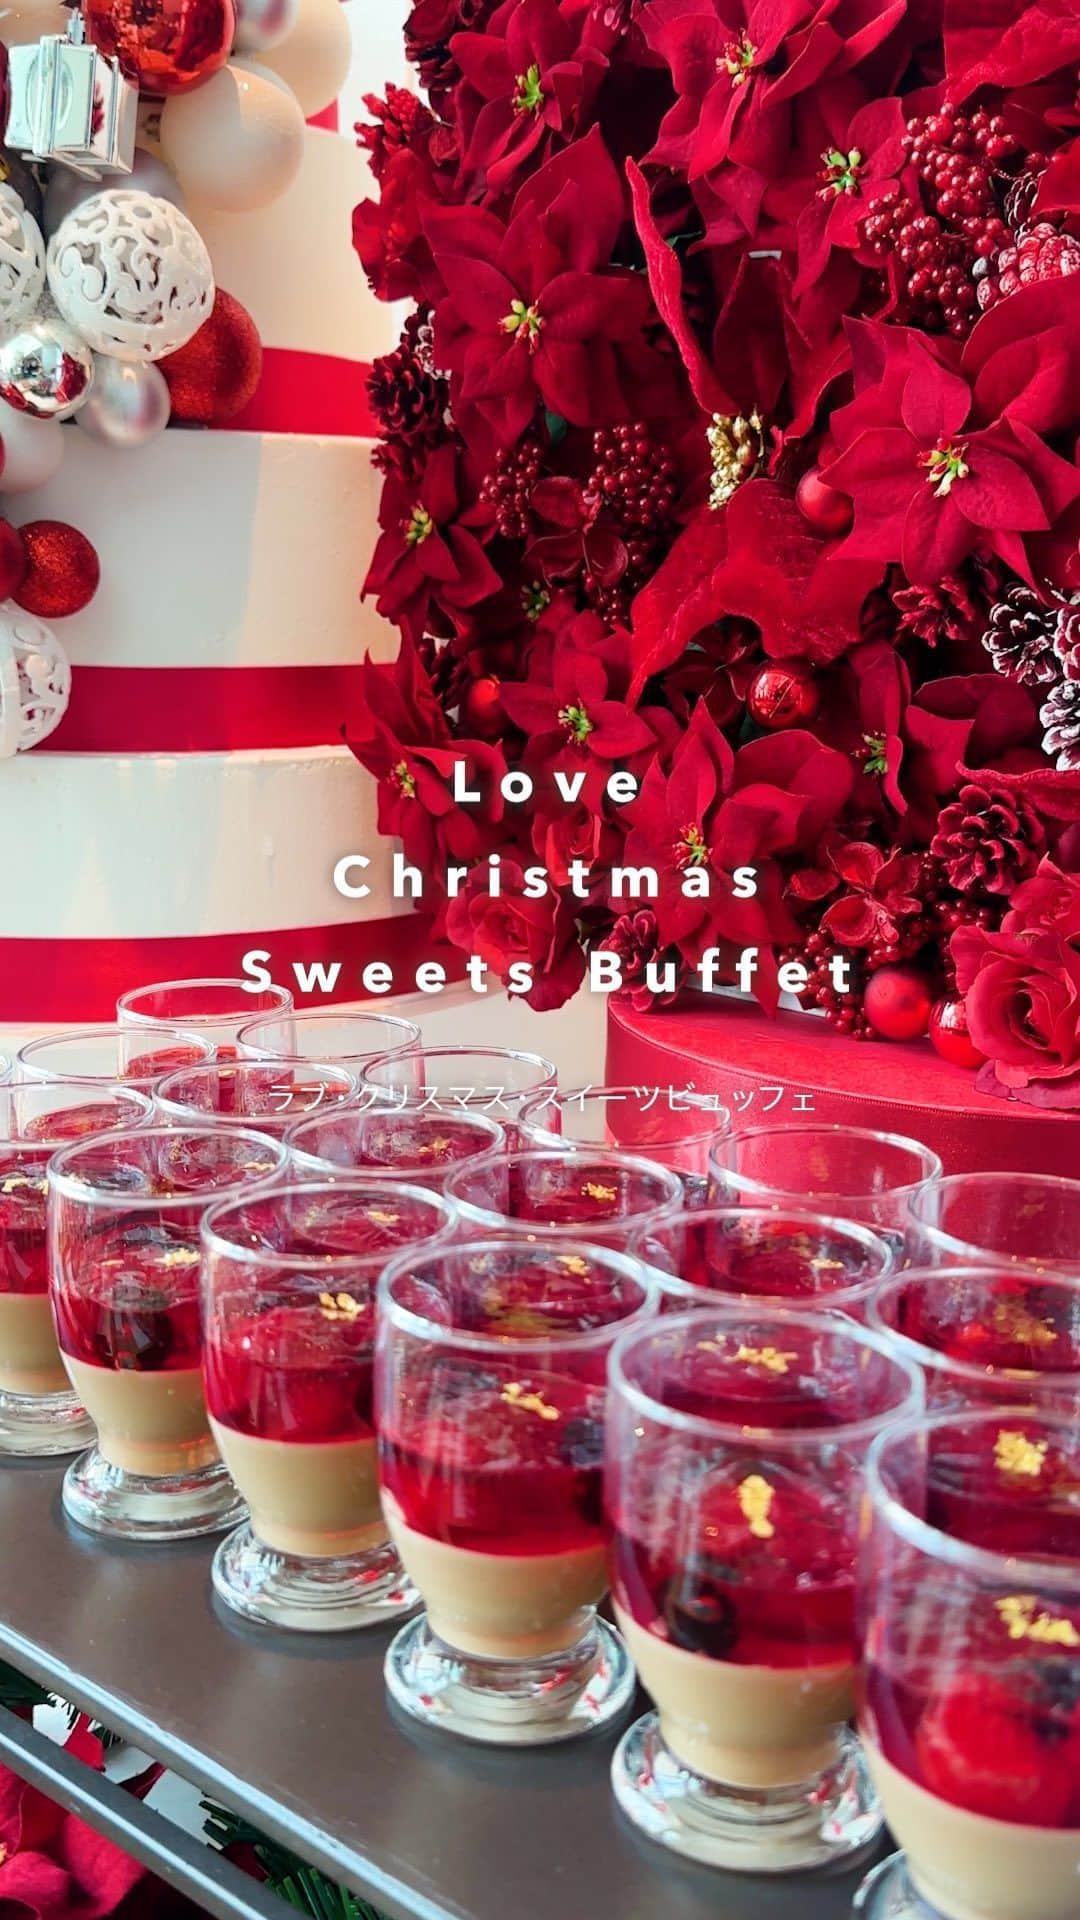 Conrad Tokyoのインスタグラム：「ラブ・クリスマス・スイーツビュッフェ🎁❤️  真っ赤なリボンに包まれたギフトボックスや、ホワイトクリスマスのような白いツリーなど、赤と白のコントラストが心躍るクリスマスの季節を演出したビュッフェが土・日曜・祝日に開催🎉  華やかで洗練されたクリスマスの雰囲気をぜひお楽しみください♪  Love Christmas Sweets Buffet🎁❤️  The buffet is held on Saturdays, Sundays, and holidays, with contrasting red and white, such as gift boxes wrapped in bright red ribbons and a white tree reminiscent of White Christmas, creating an exciting Christmas season.  Enjoy the gorgeous and sophisticated Christmas atmosphere♪   #コンラッド東京 #コンラッド #東京ホテル #ホテル #ラグジュアリーホテル #ホテルライク #ホテルステイ #ホカンス #おすすめホテル #ビュッフェ #期間限定 #夜景 #ホテルディナー #デート #デートディナー #クリスマス #クリスマスデート #スイーツ #クリスマスプレゼント #クリスマスメニュー #スイーツビュッフェ #conradtokyo #conrad #hotel #tokyohotel #luxuryhotel #tokyorestaurant #tokyotrip #tokyofood #christmas」